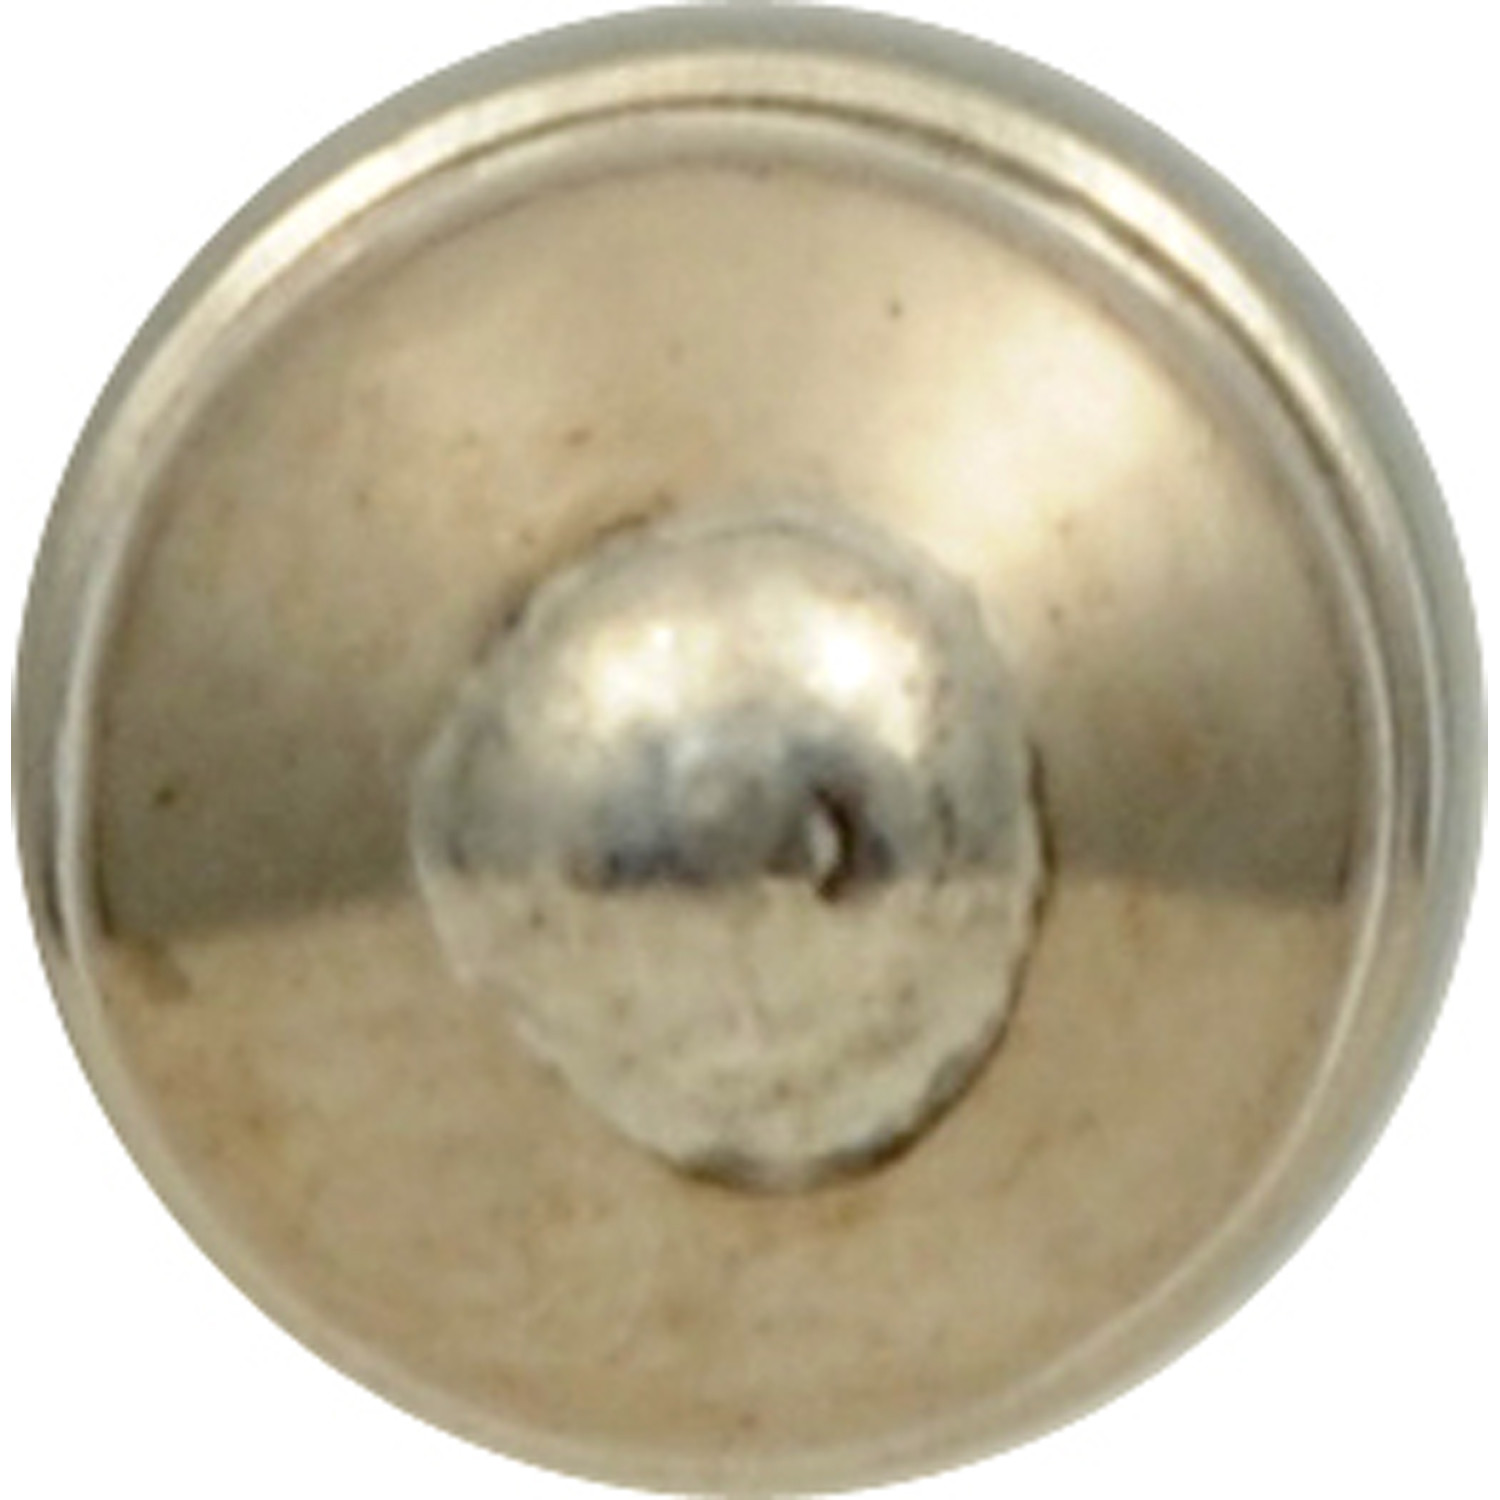 SYLVANIA RETAIL PACKS - Box Headlight Bulb (Low Beam) - SYR D2S.BX